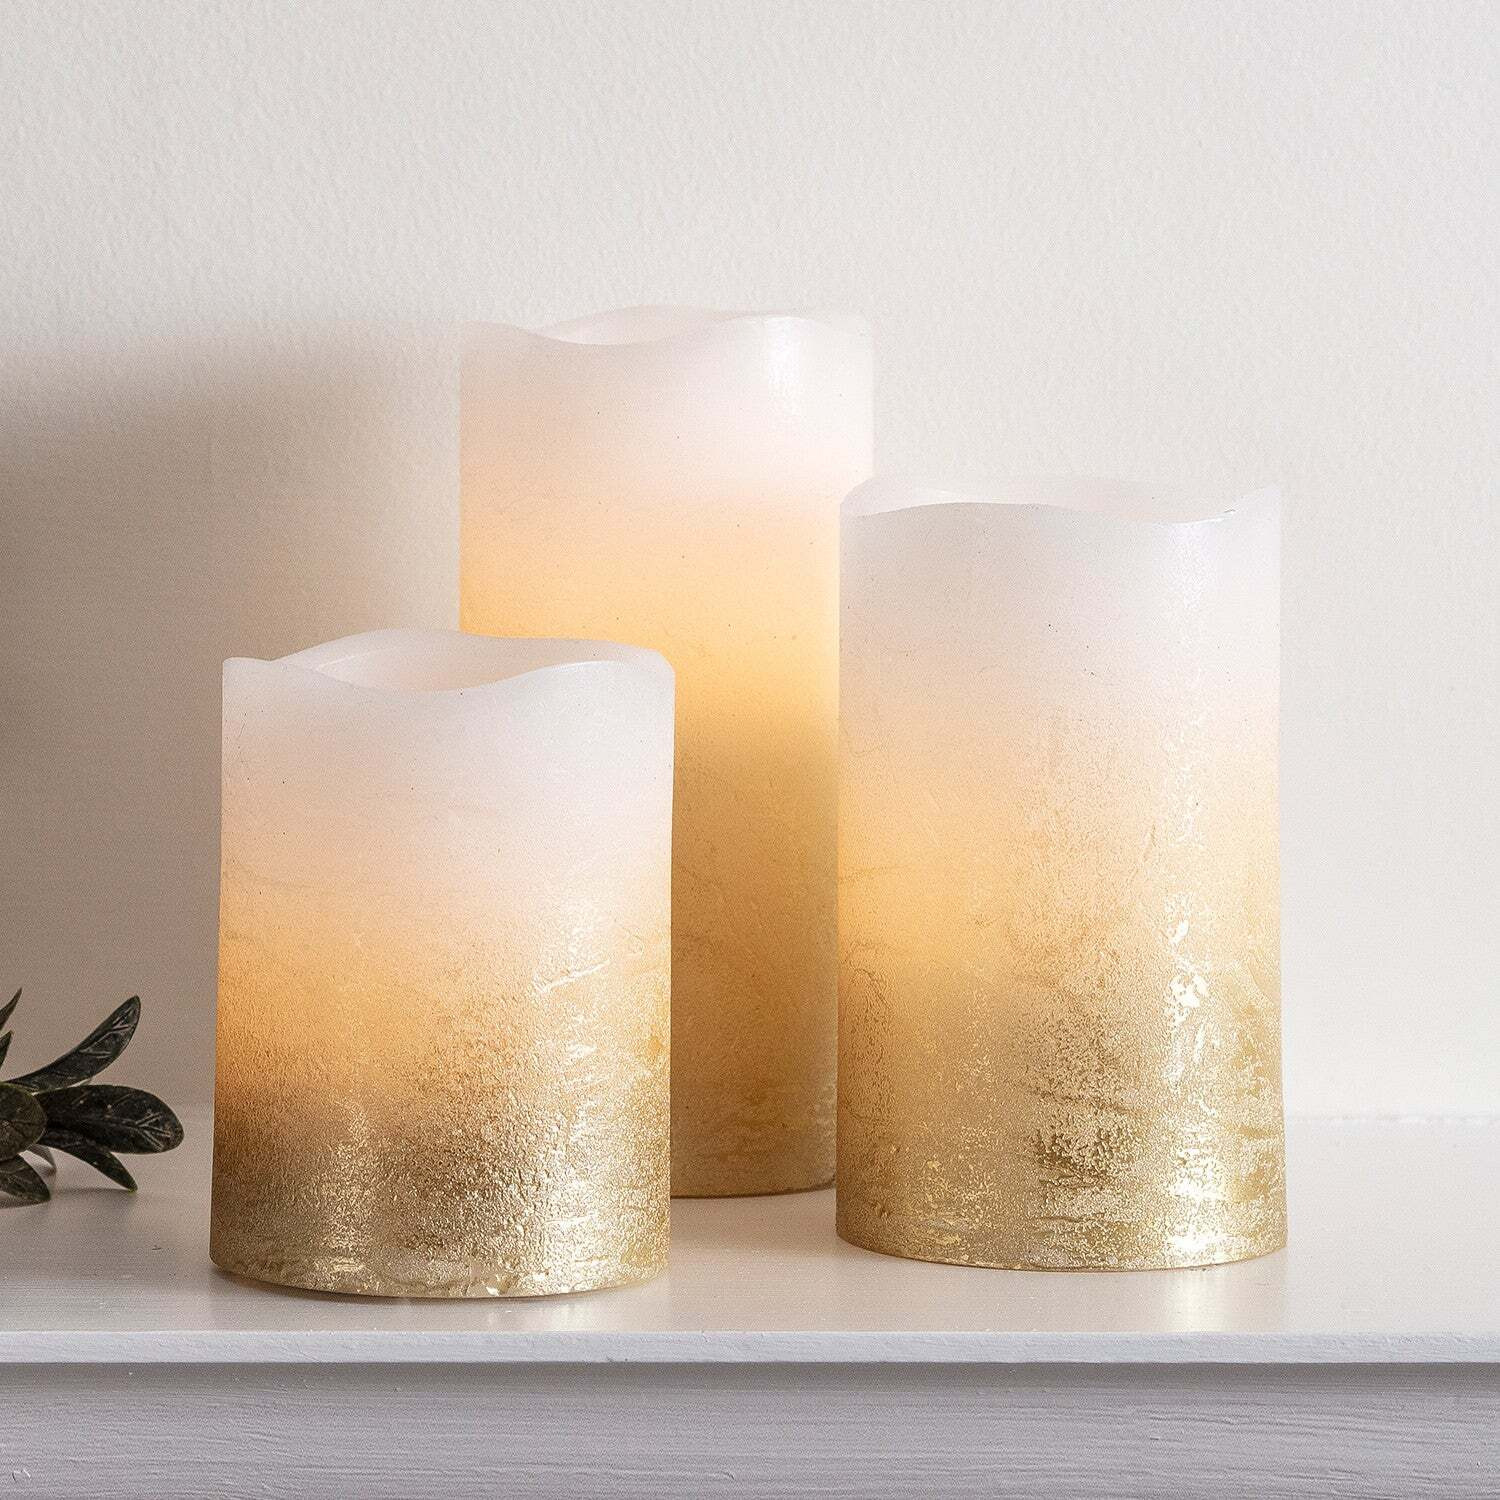 3 Metallic Gold Ombre Wax LED Pillar Candles - image 1